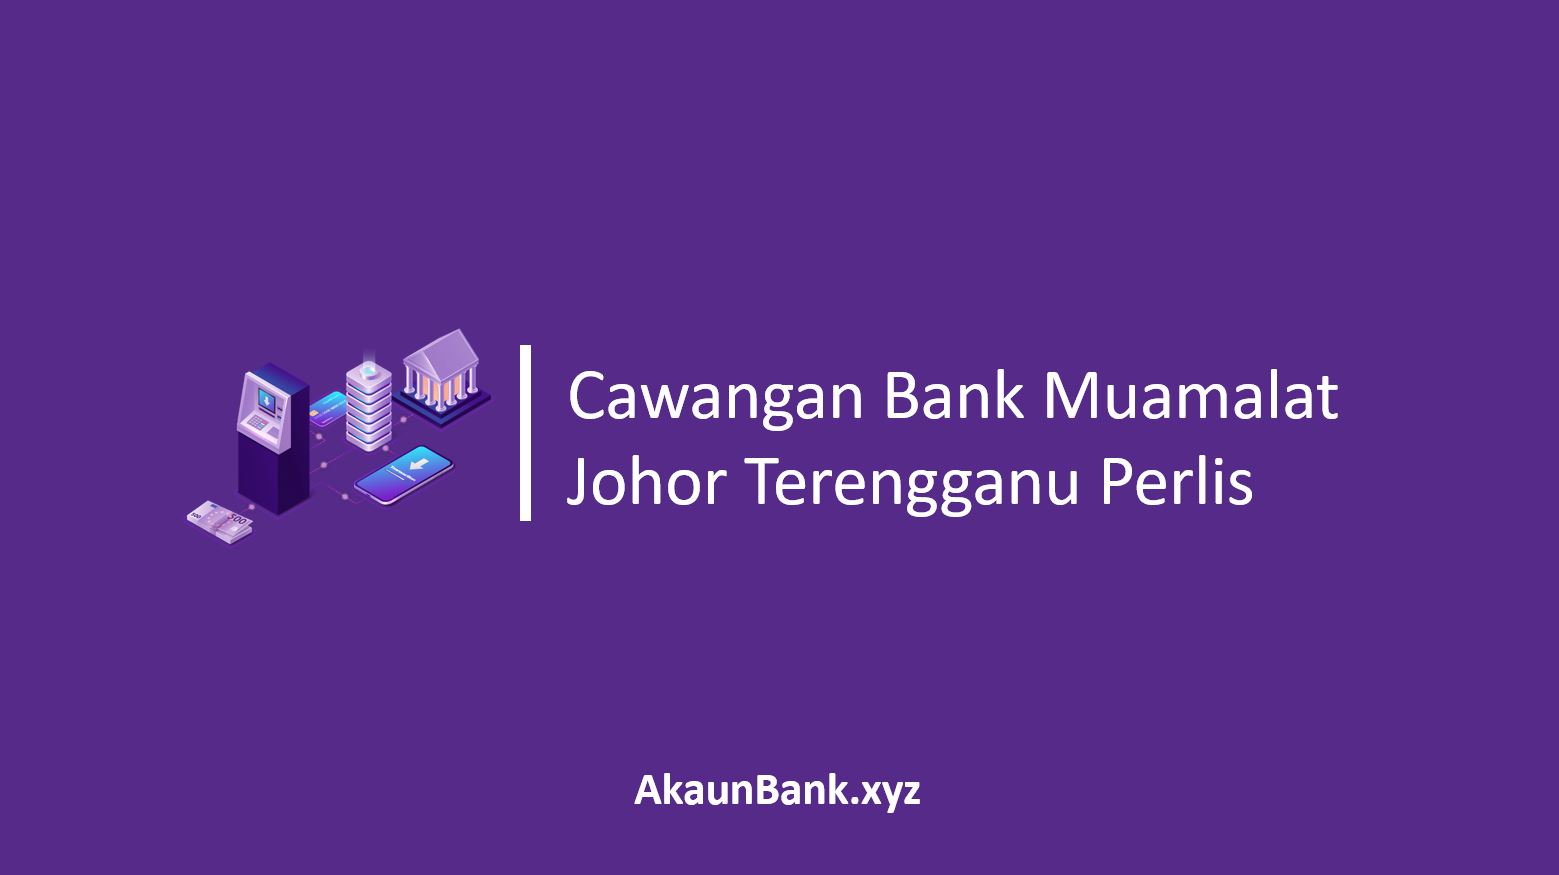 Cawangan Bank Muamalat Johor Terengganu Perlis